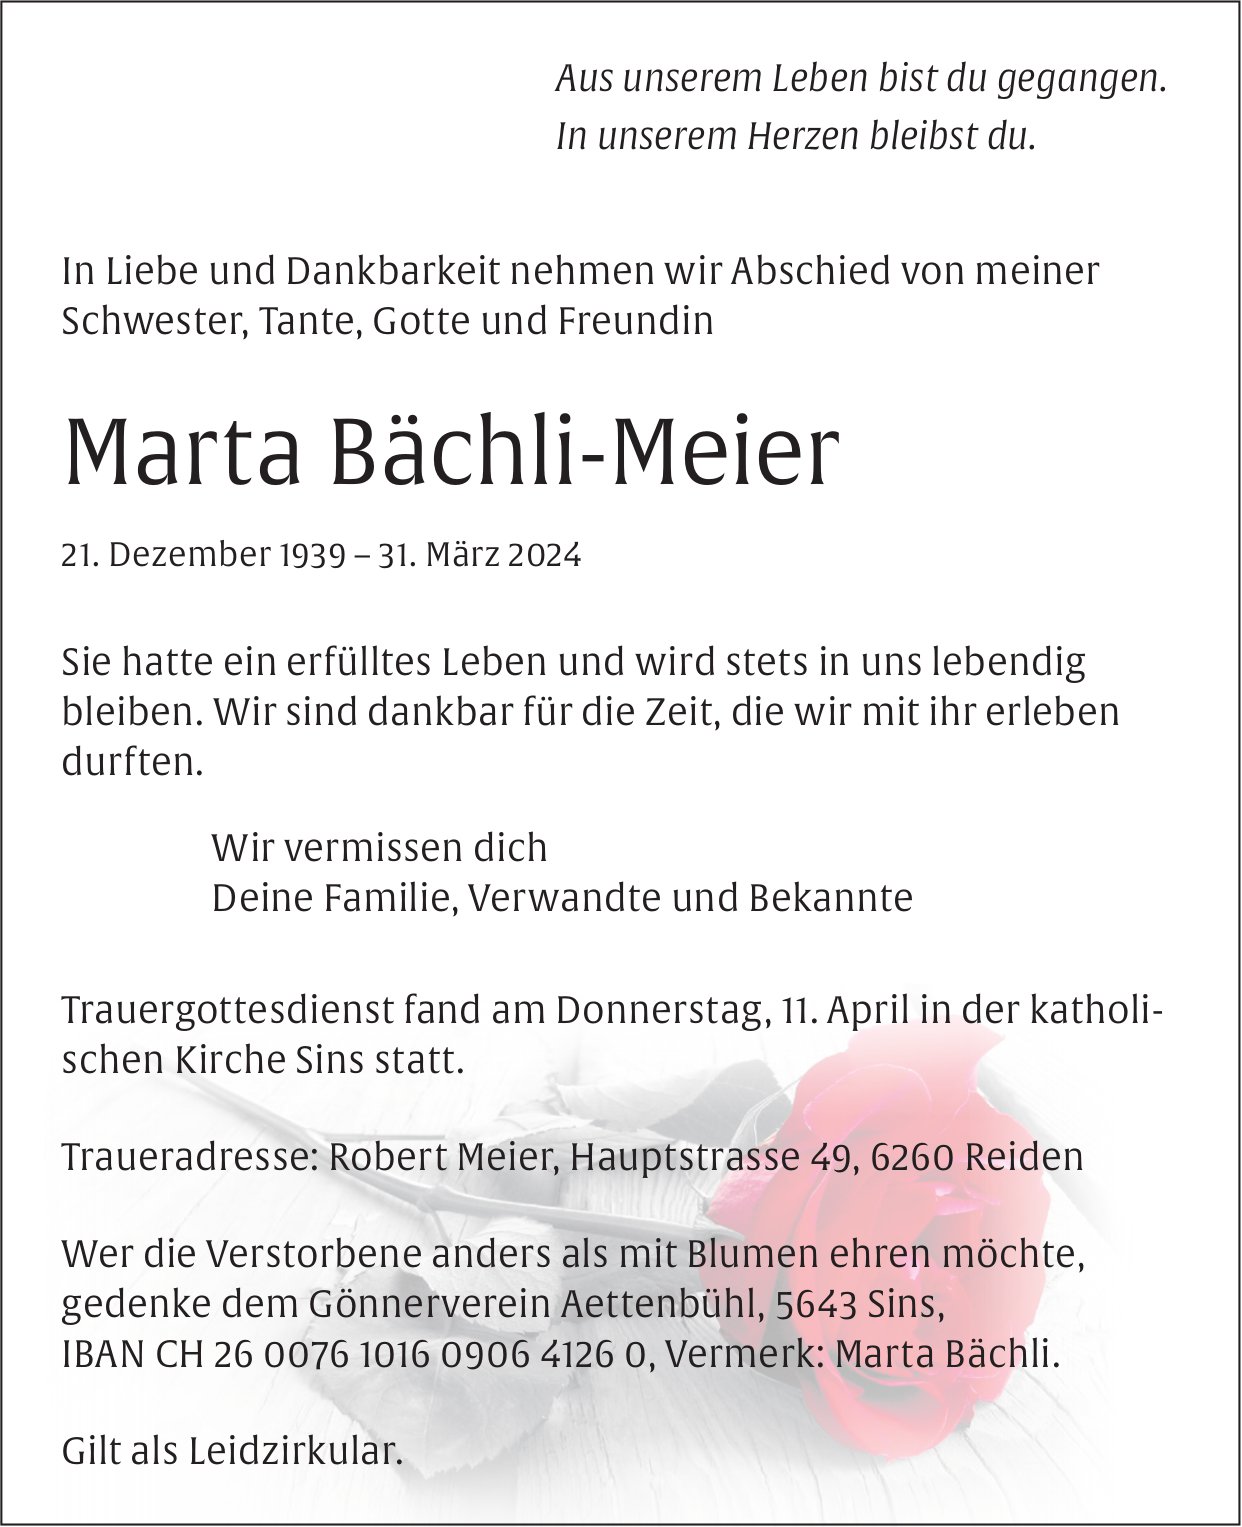 Bächli-Meier Marta, März 2024 / TA